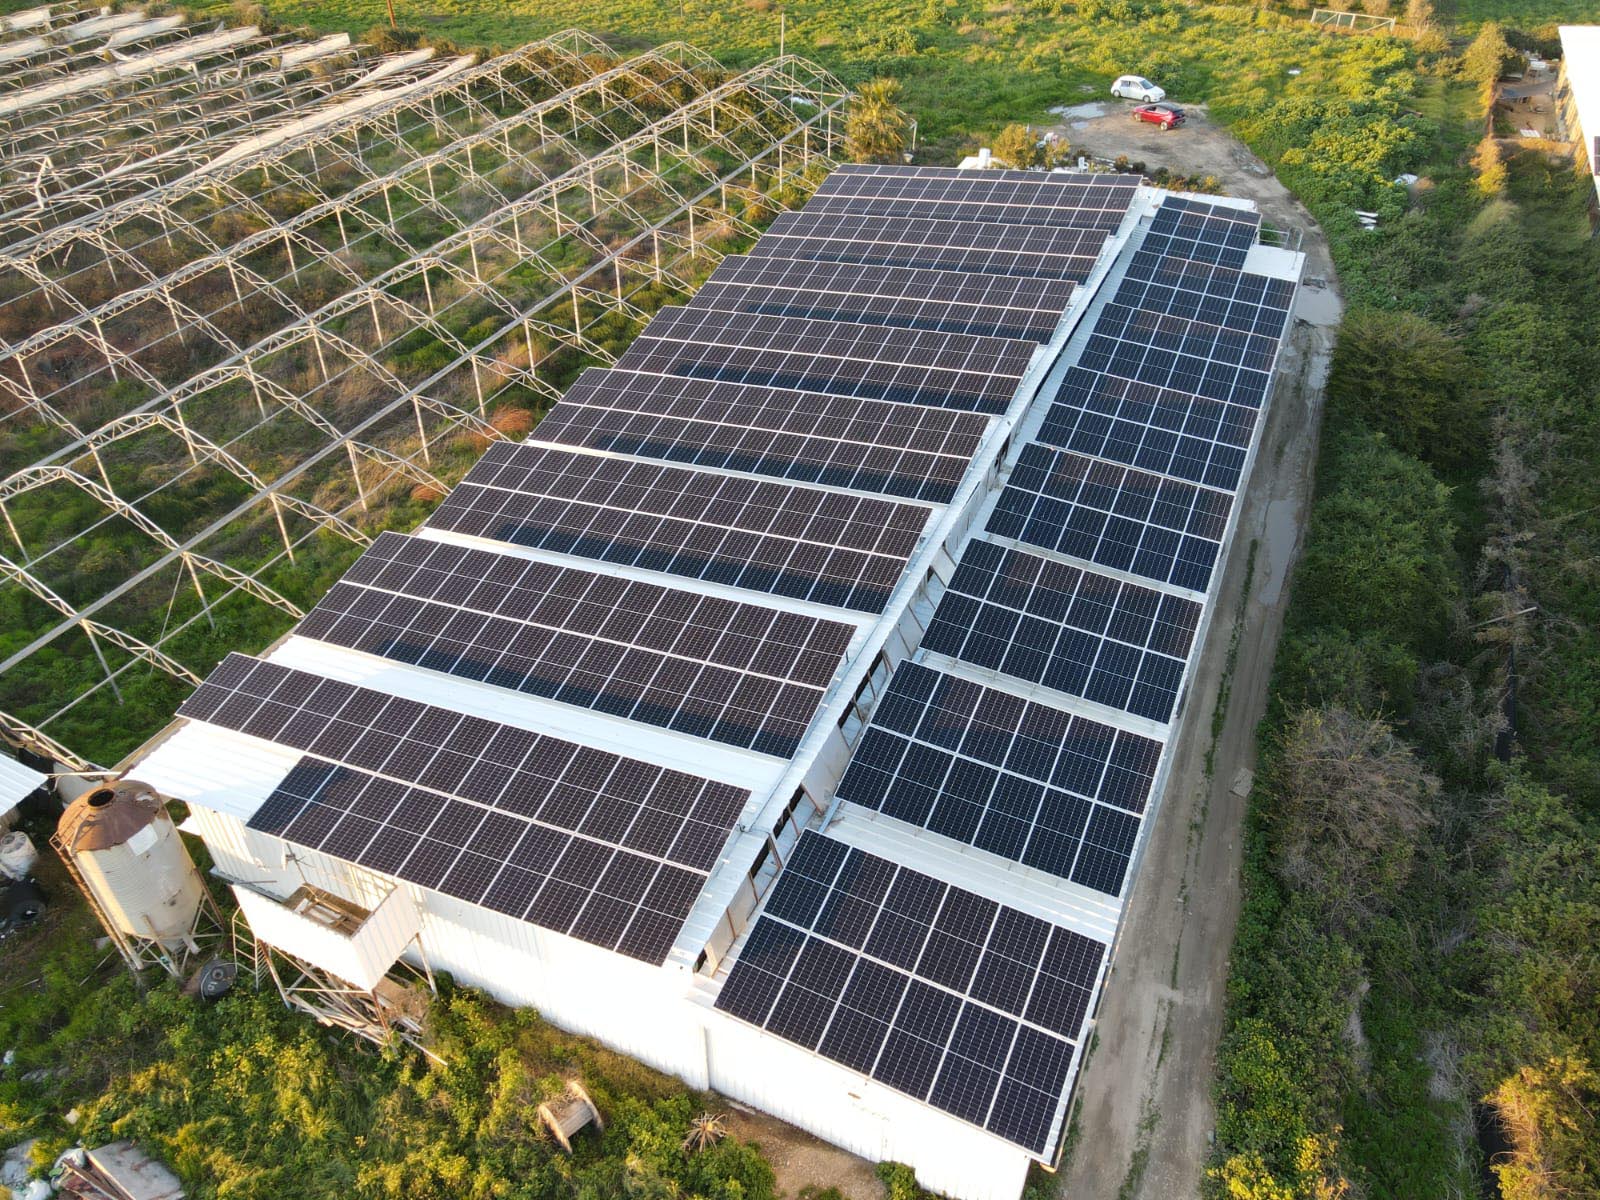 A solar system on agricultural buildings in Kfar Yedidia